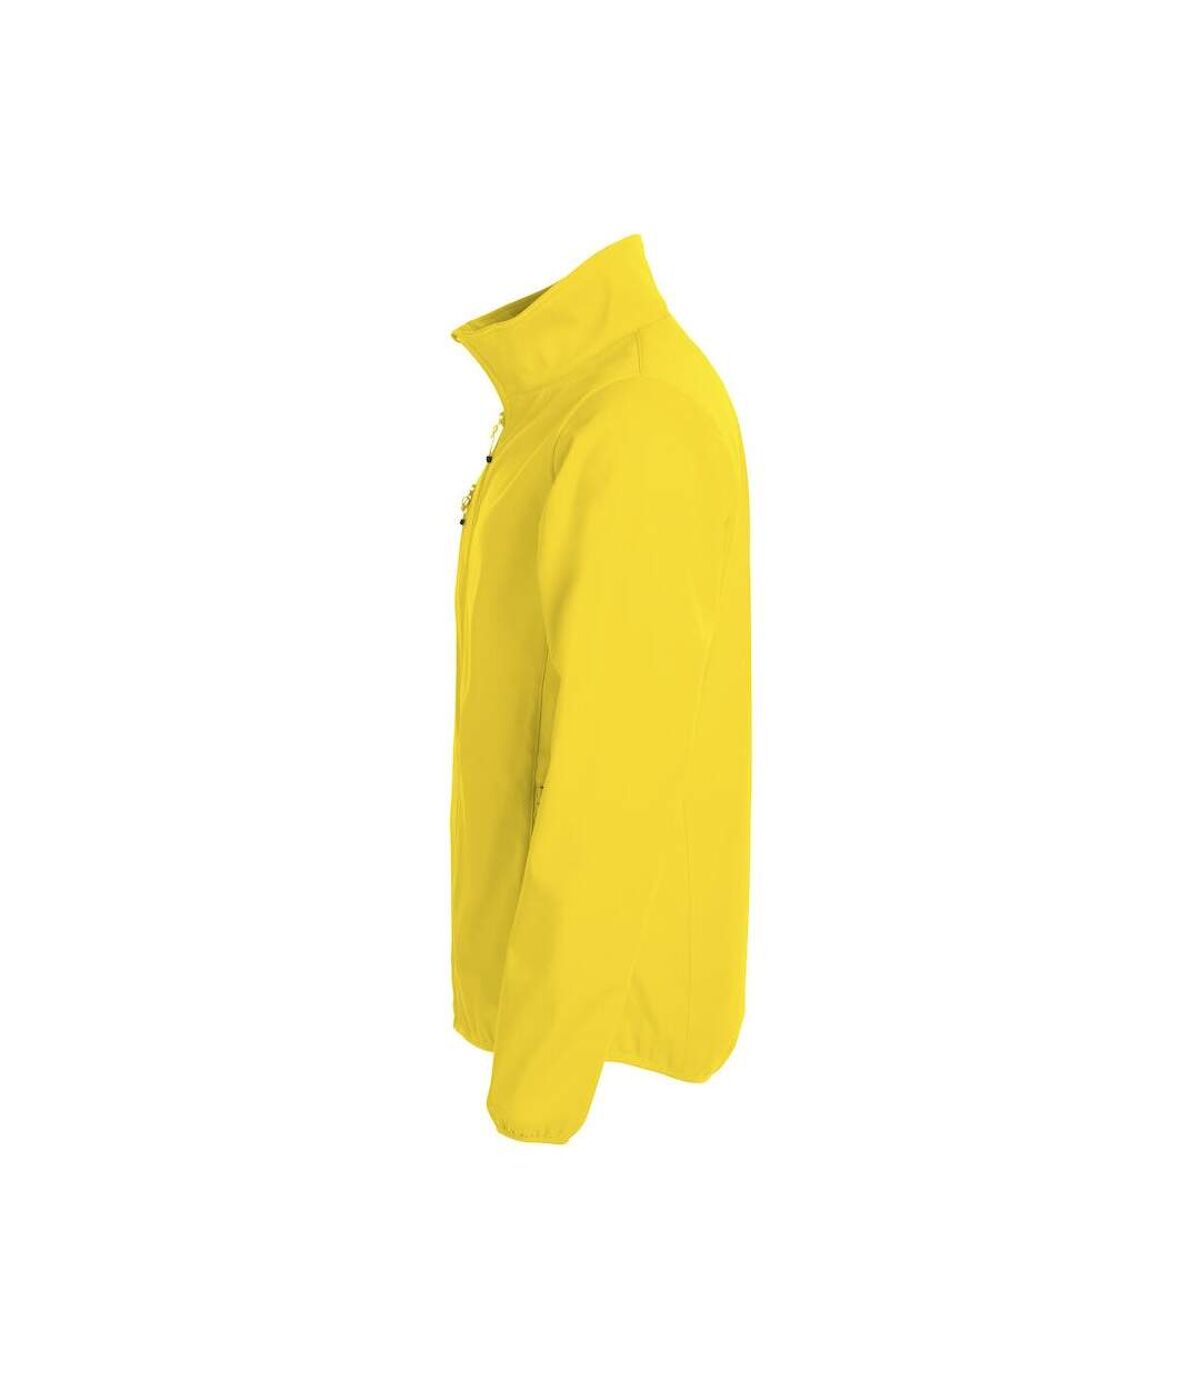 Clique Mens Basic Soft Shell Jacket (Lemon)